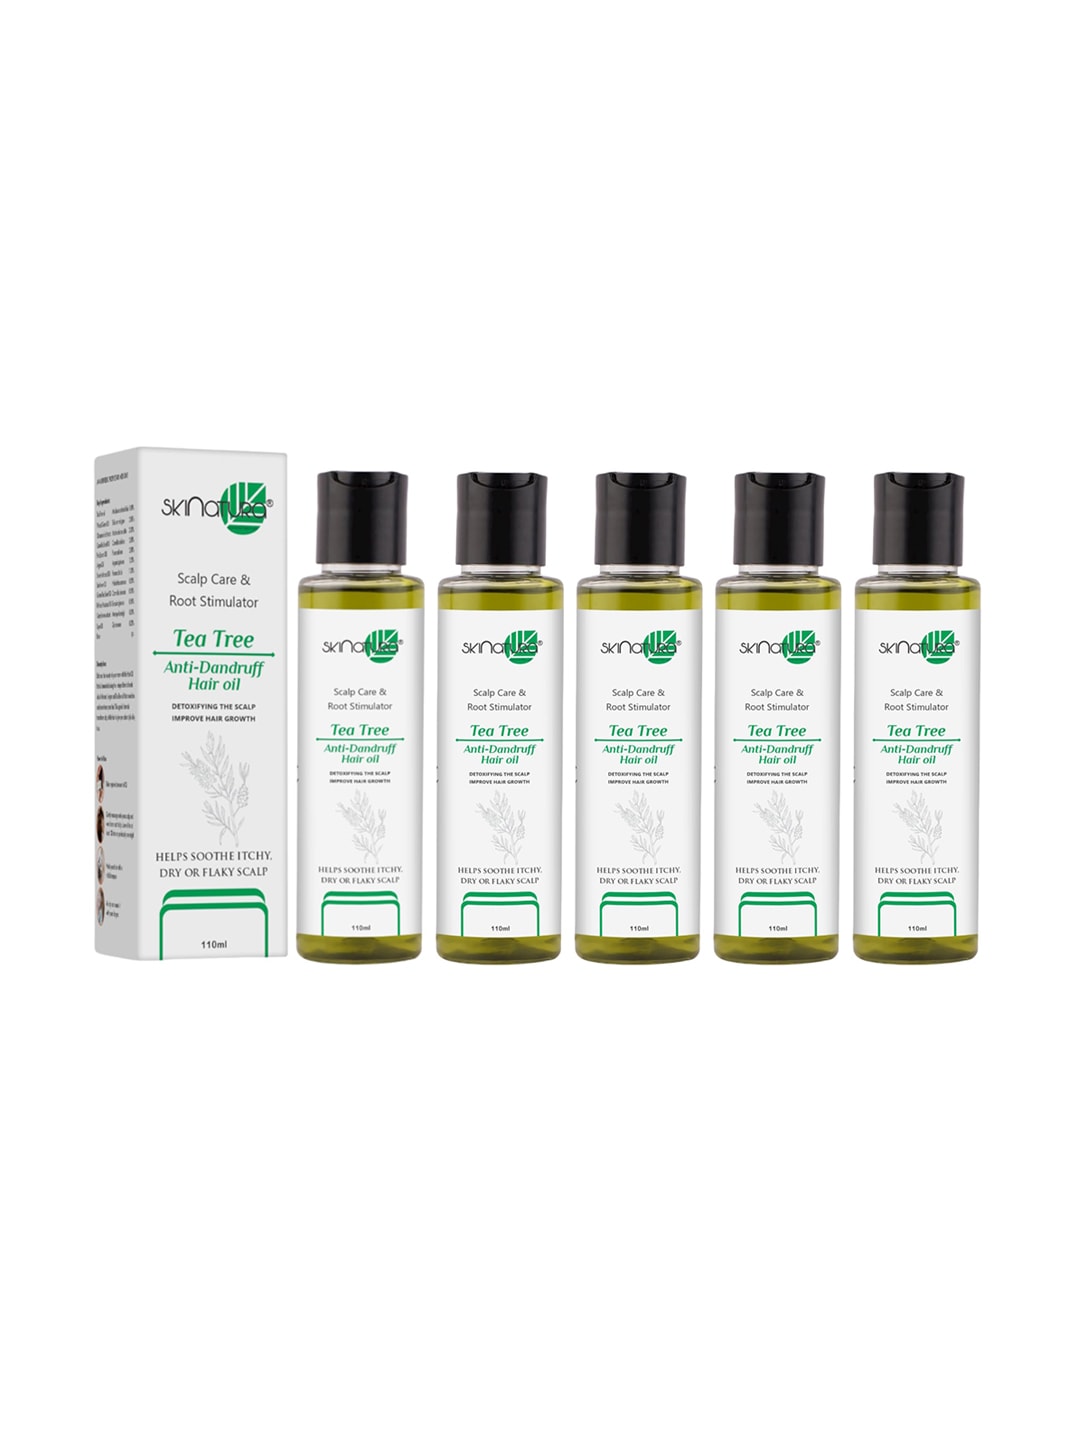 Skinatura Set of 5 Tea Tree Anti-Dandruff Hair Oil - 110ml each Price in India